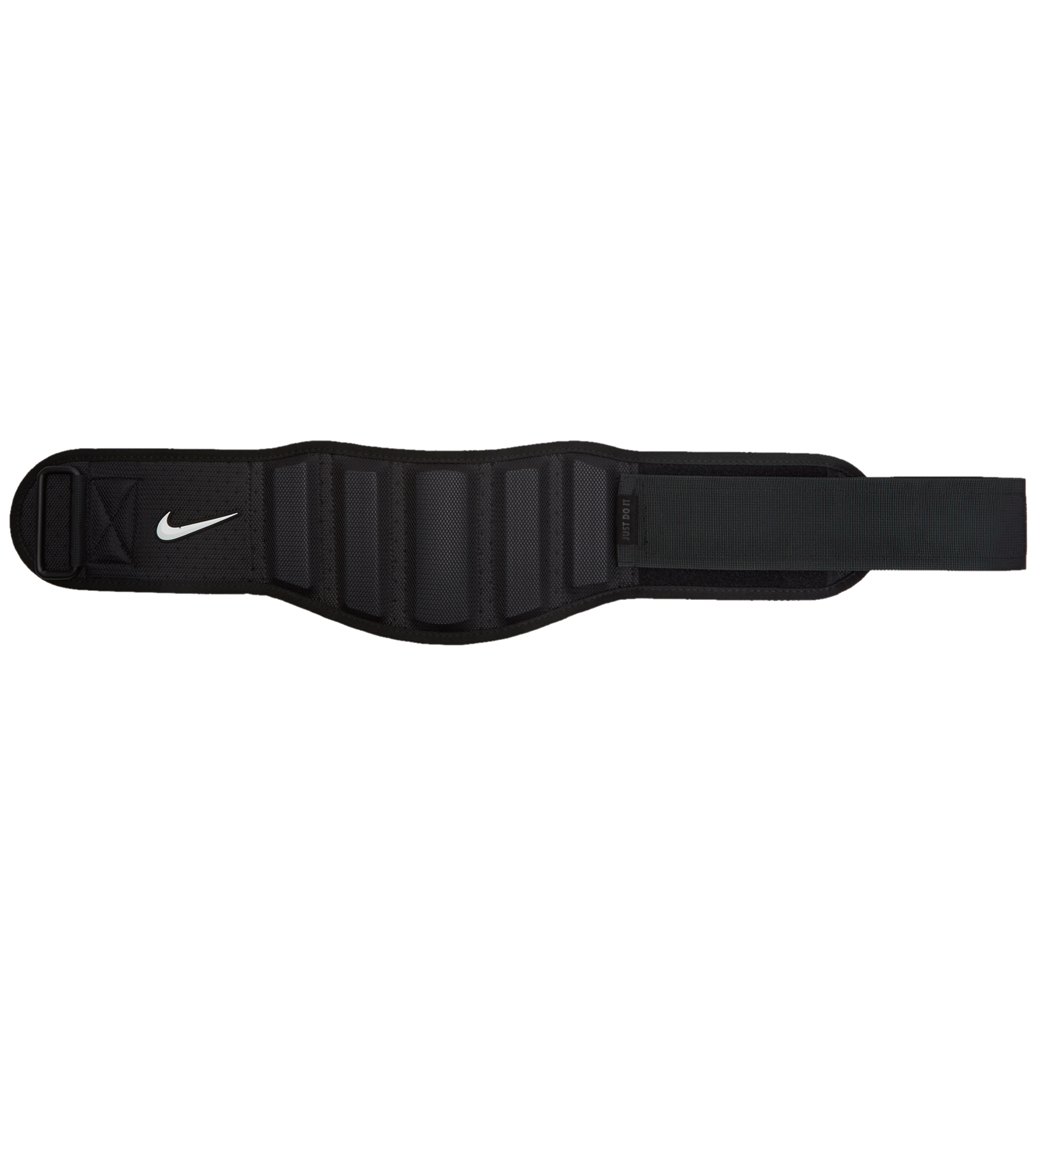 Nike Structured Training Belt 3.0 at 